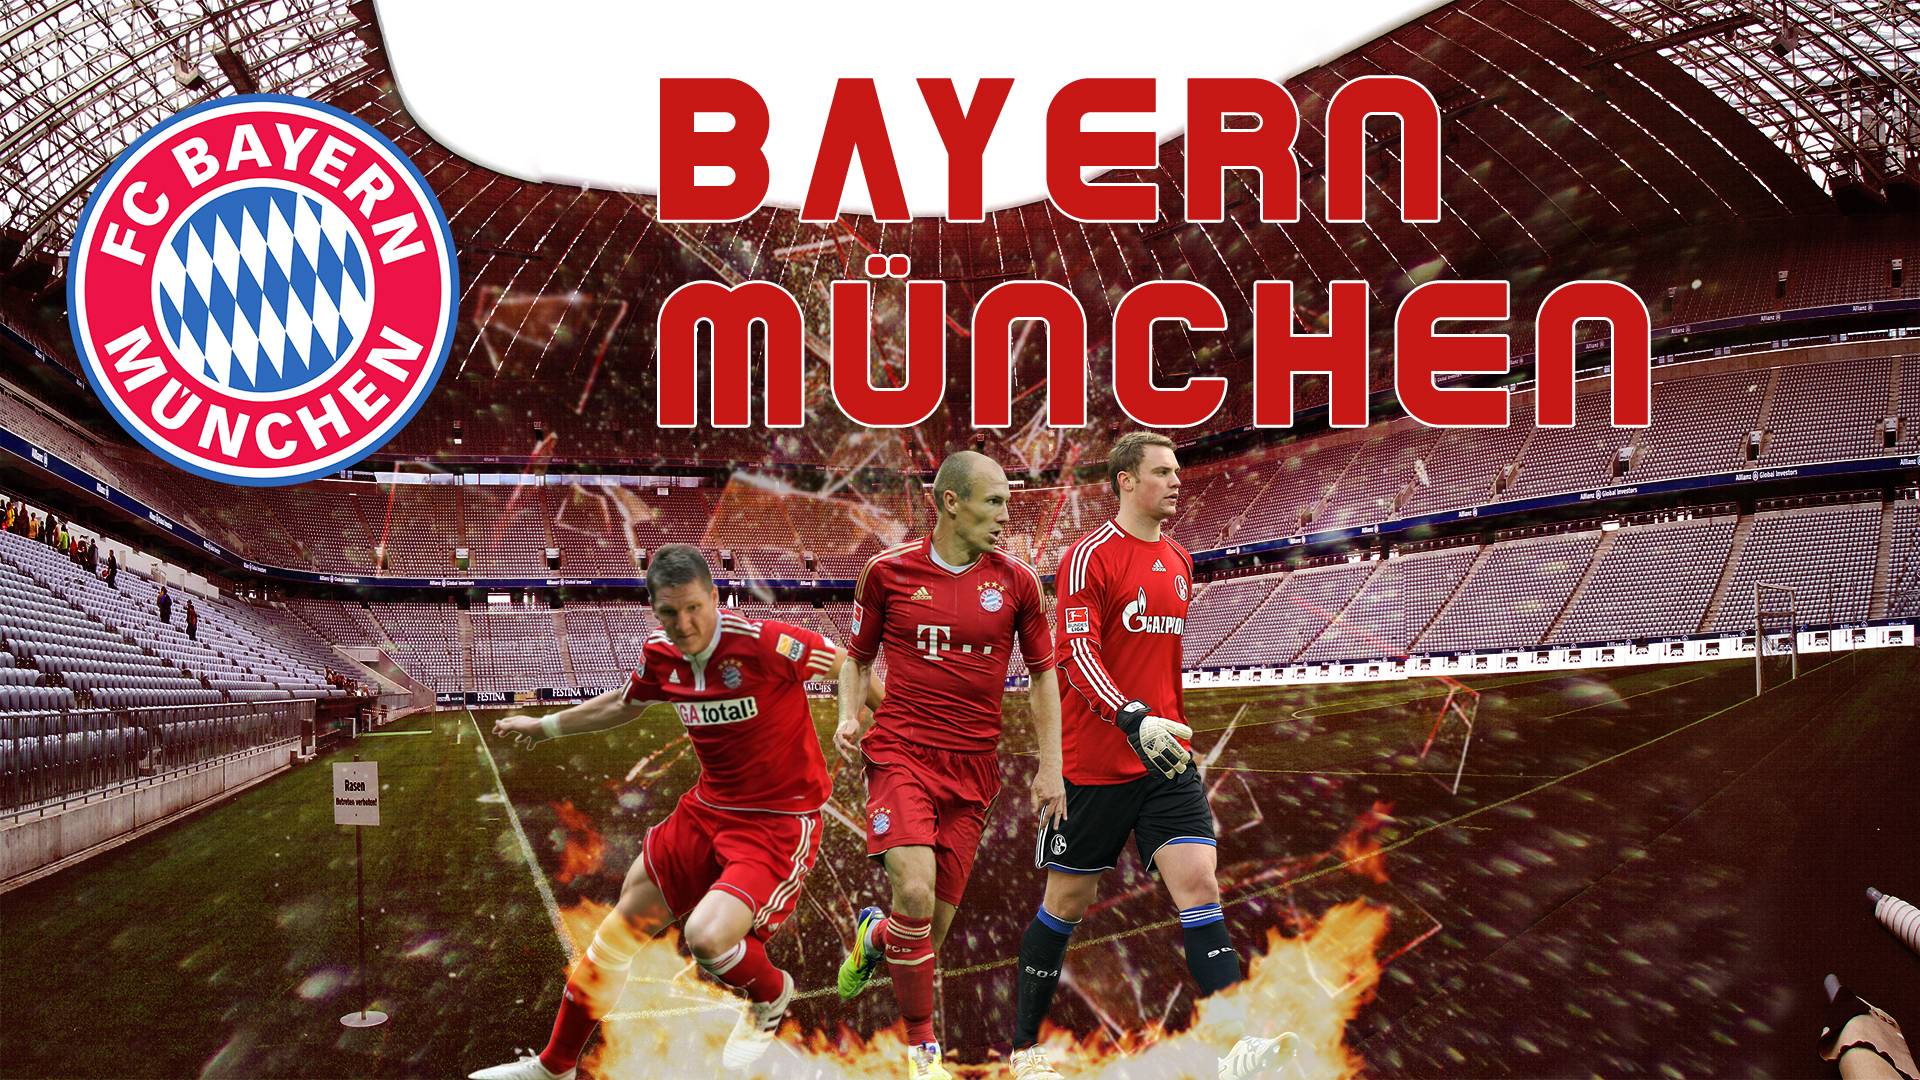 Bayern Munich Wallpaper Free 1080p Wallpaper. Cool